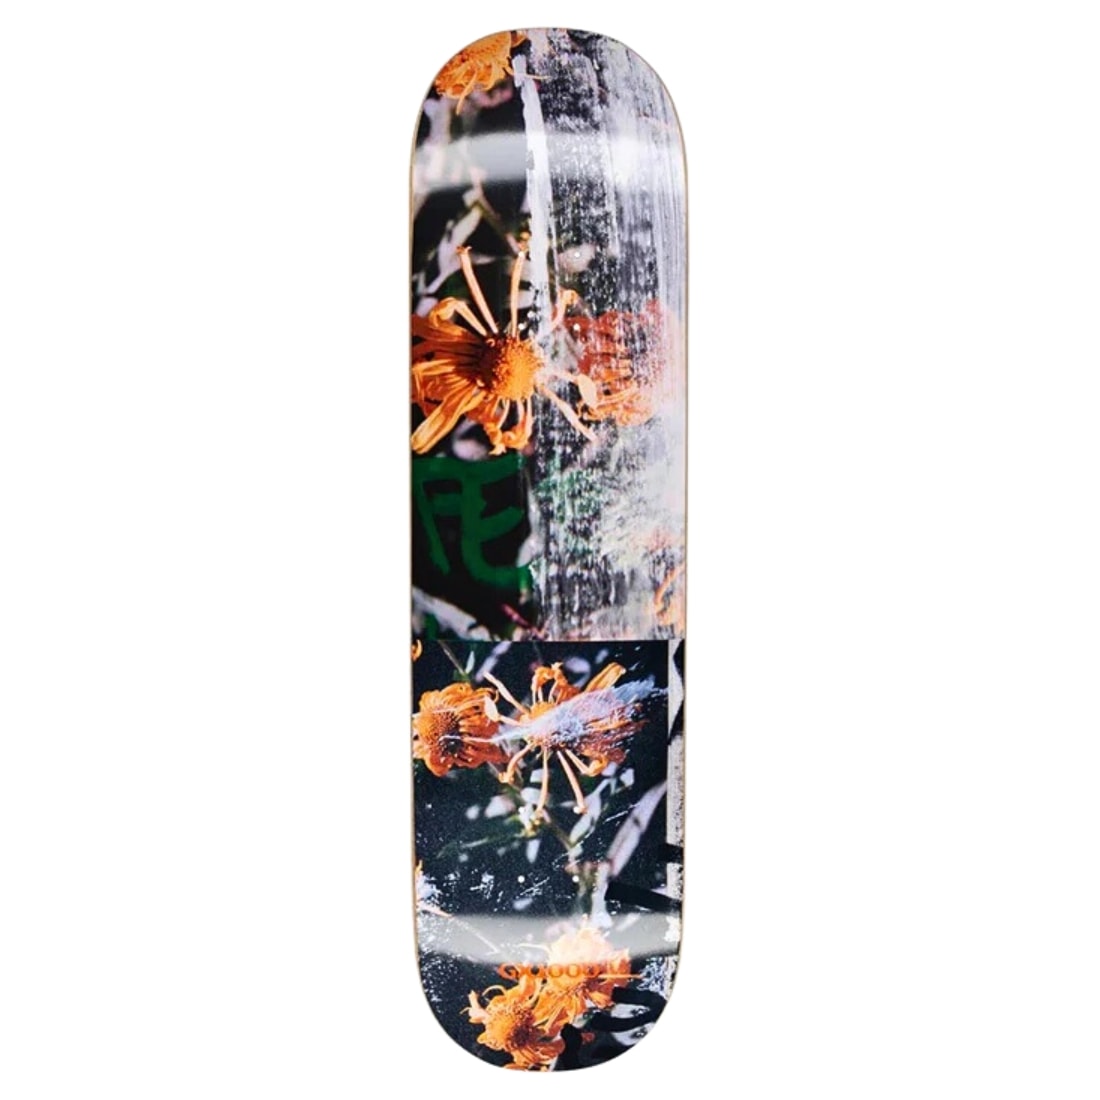 Gx1000 8.5&quot; Flowers Deck - Multi - Skateboard Deck by GX1000 8.5 inch